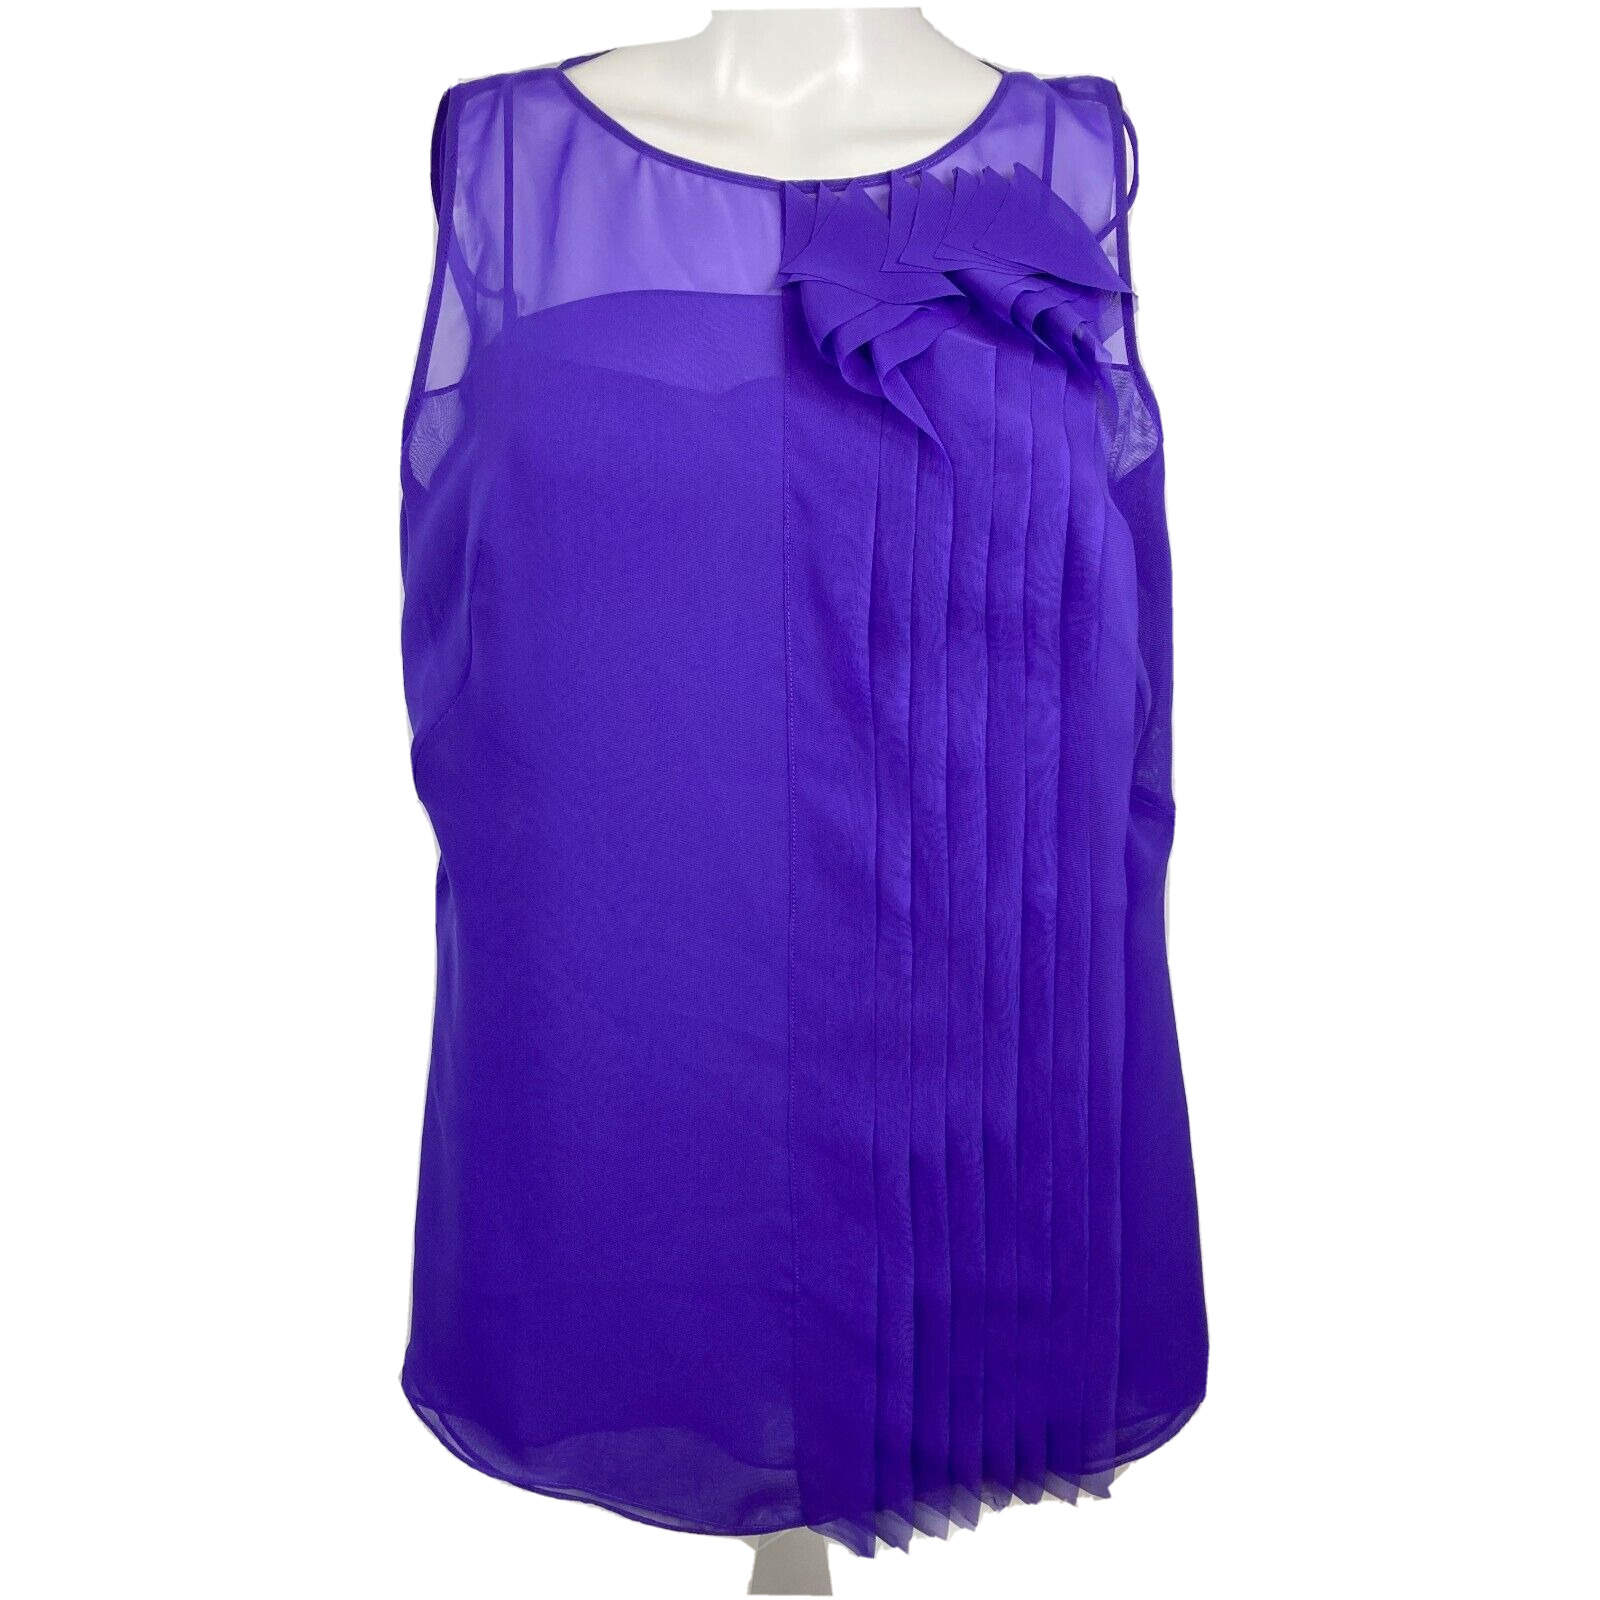 AKRIS Punto Womens Purple Chiffon Pin Tuck Top Sz 8 Sheer Over Cami 2PC